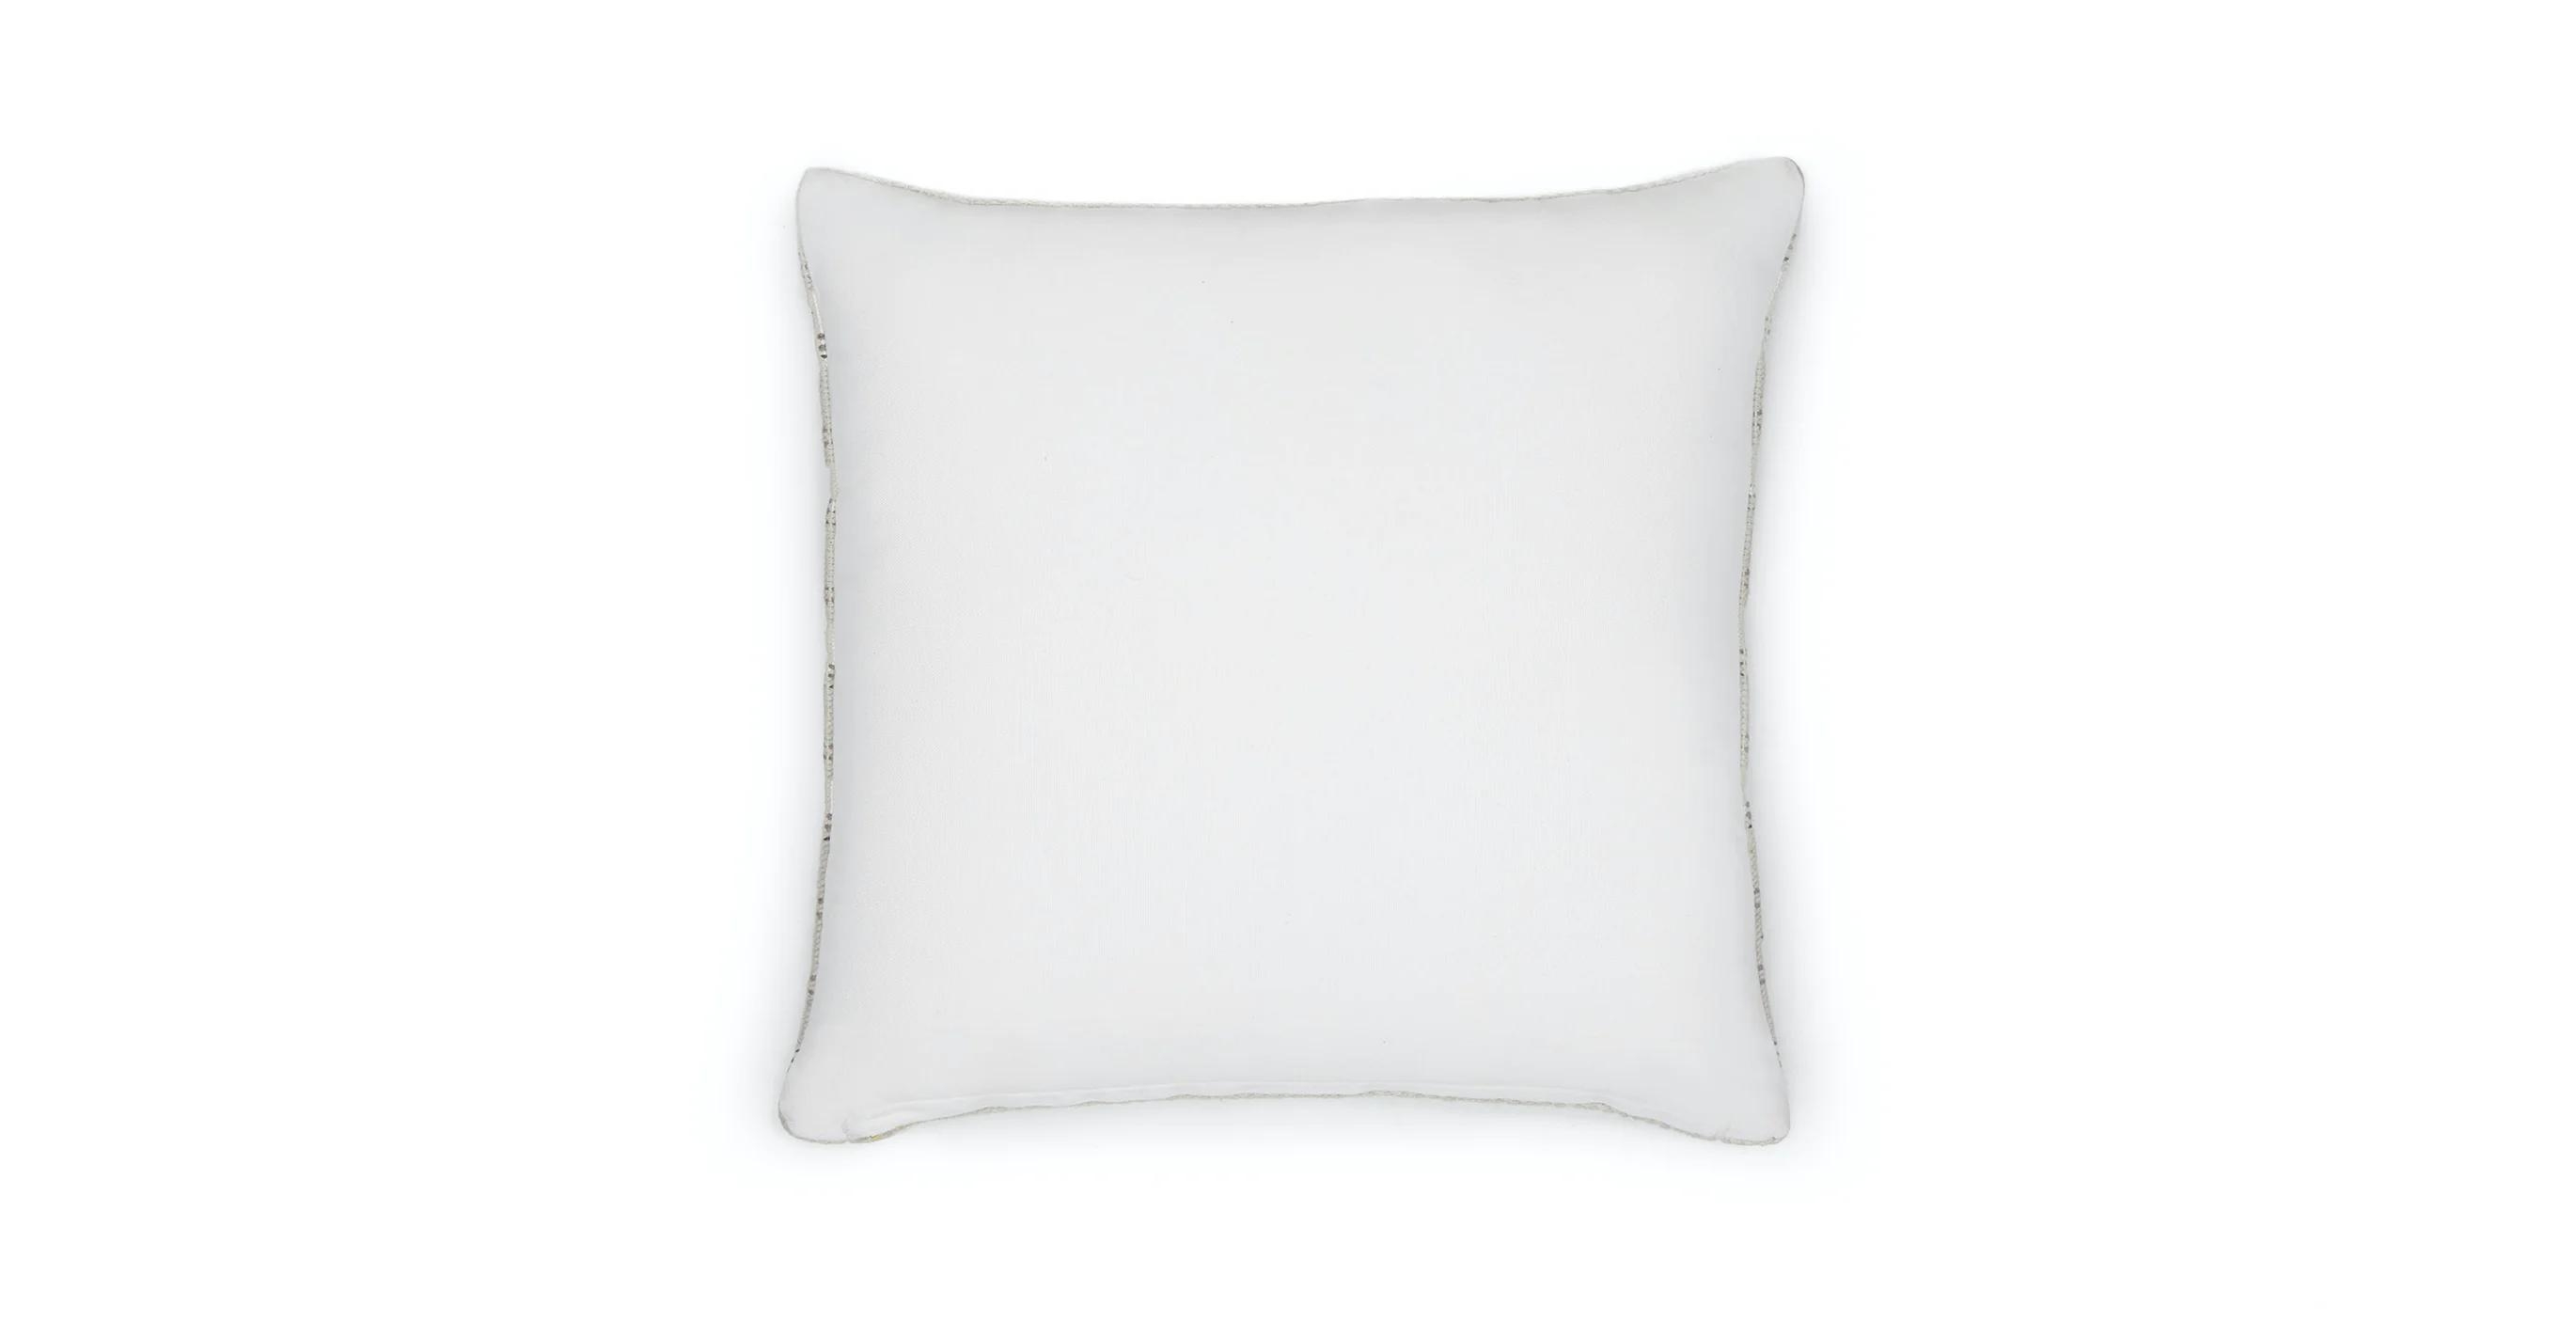 Jema Gainsboro Gray Pillow - Image 3